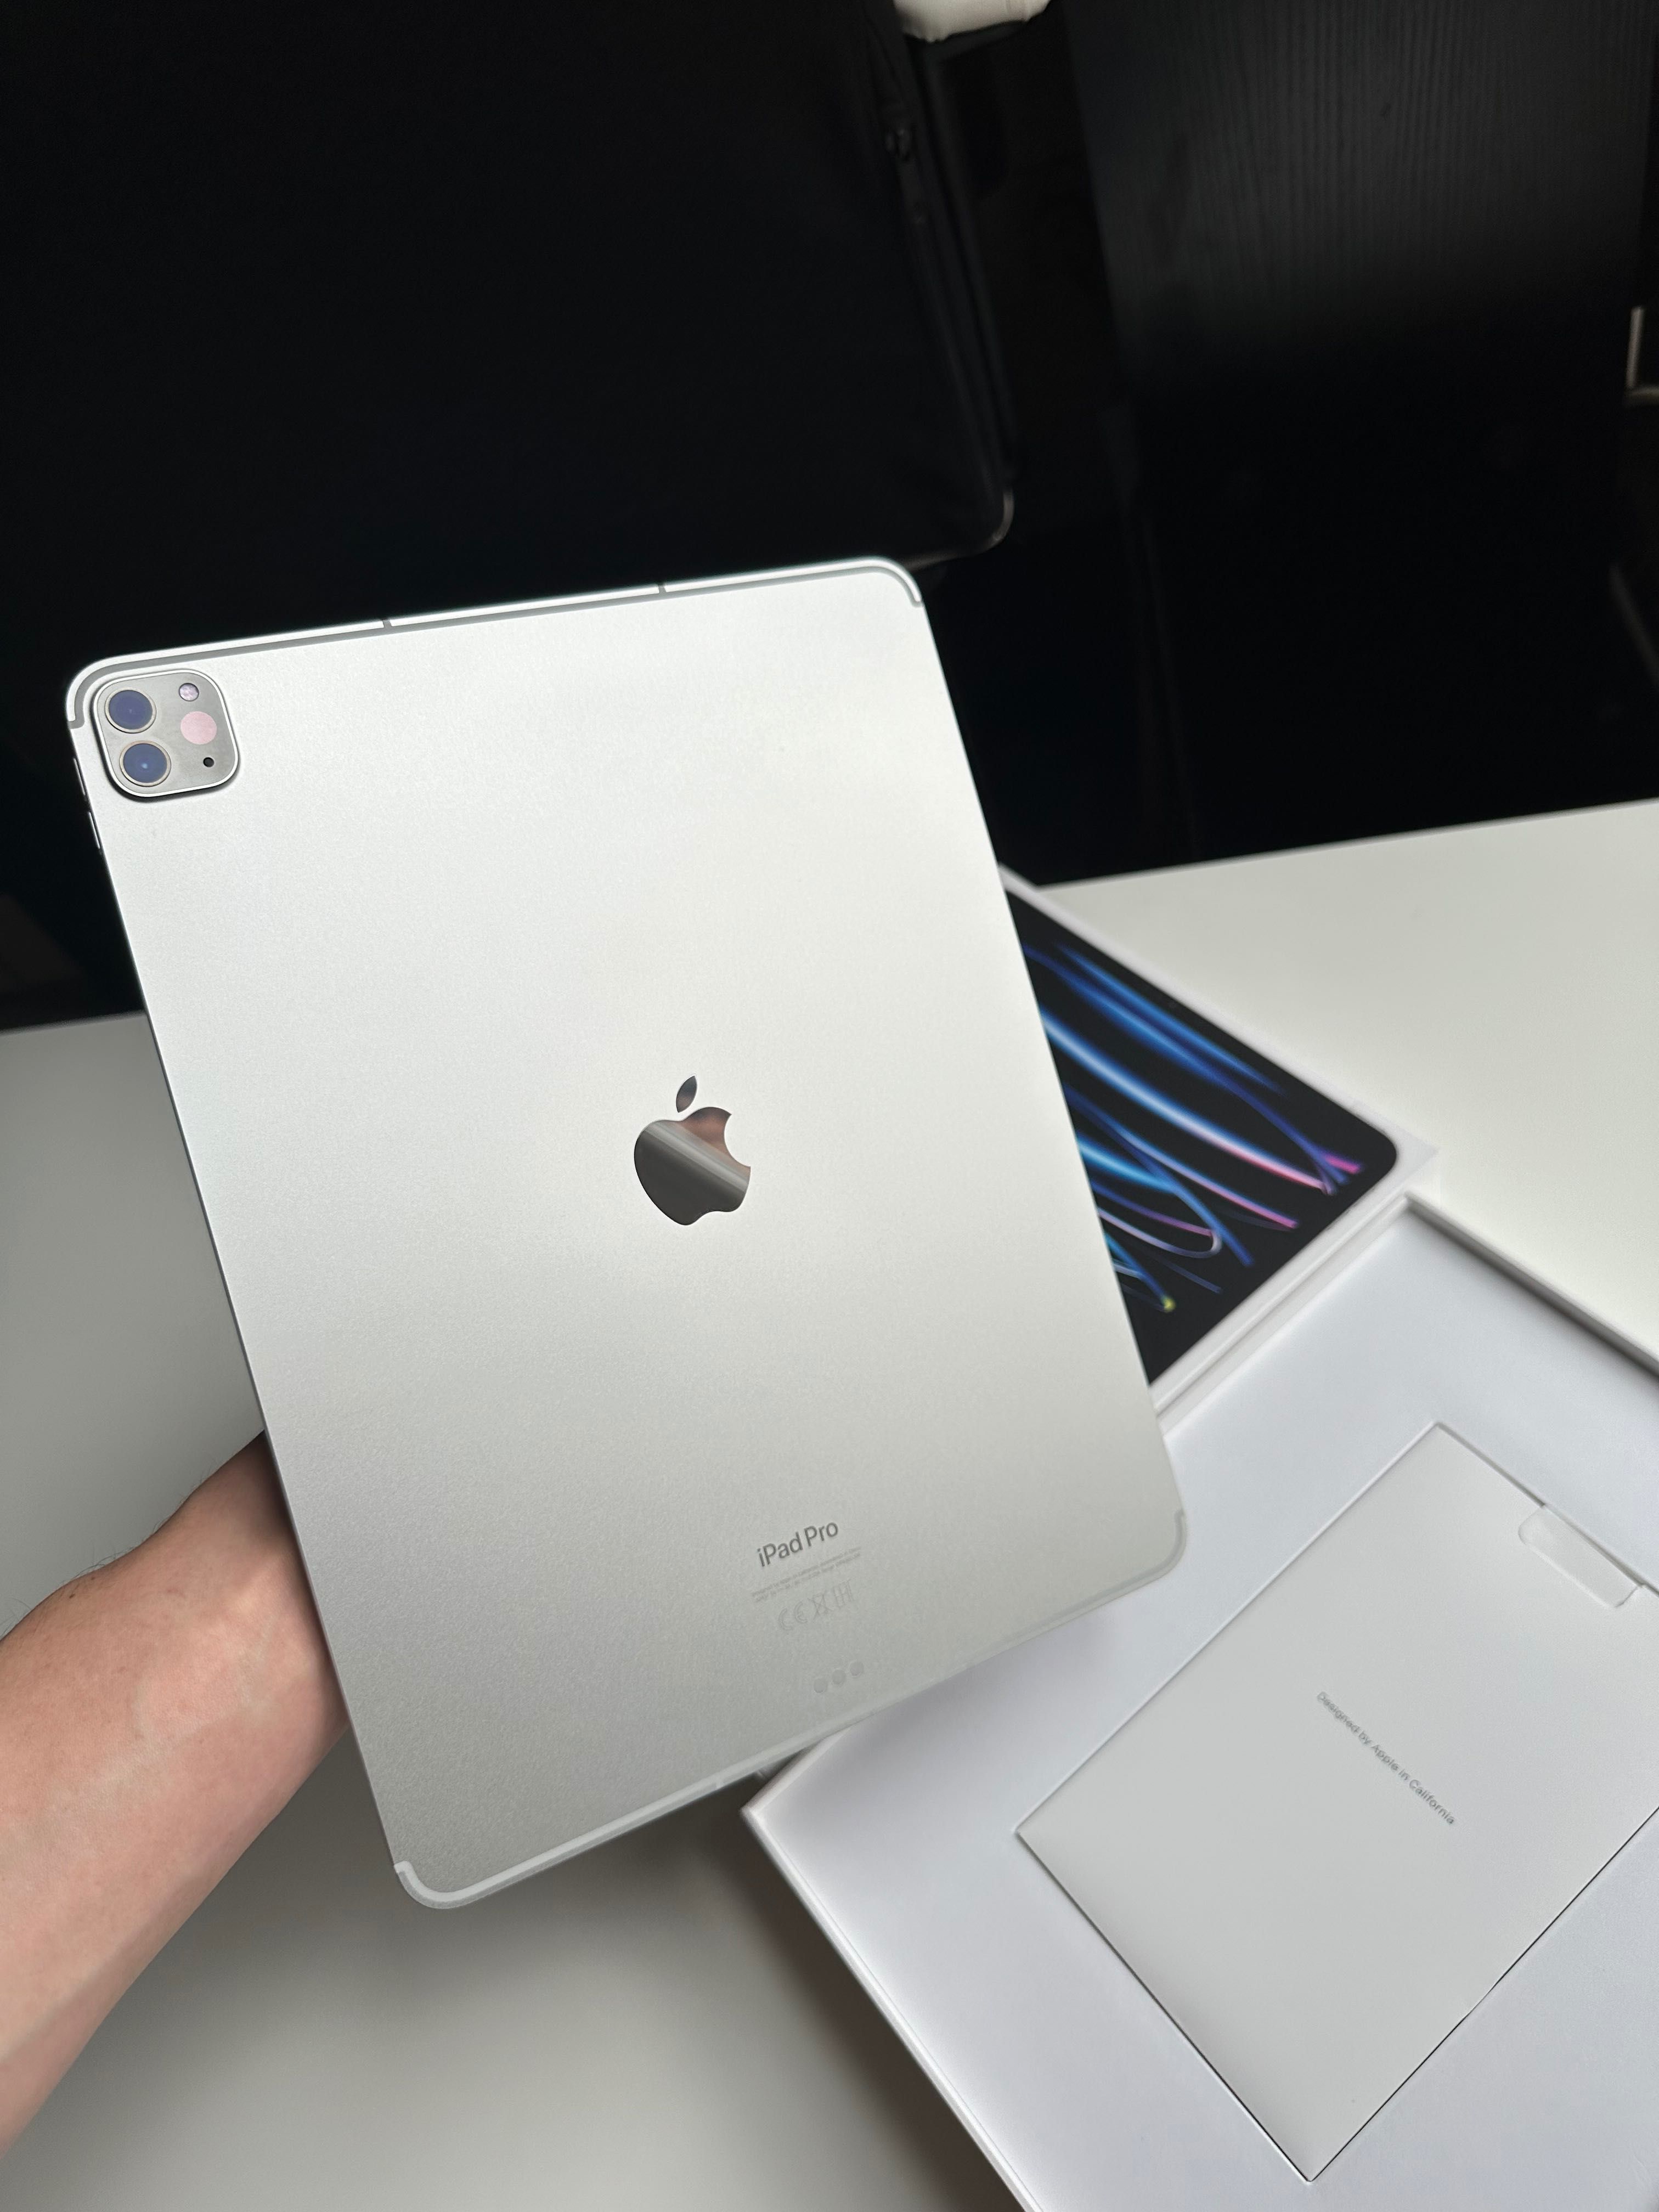 iPad Pro 12.9-inch(6th Generation)128GB WI-FI + Cellular